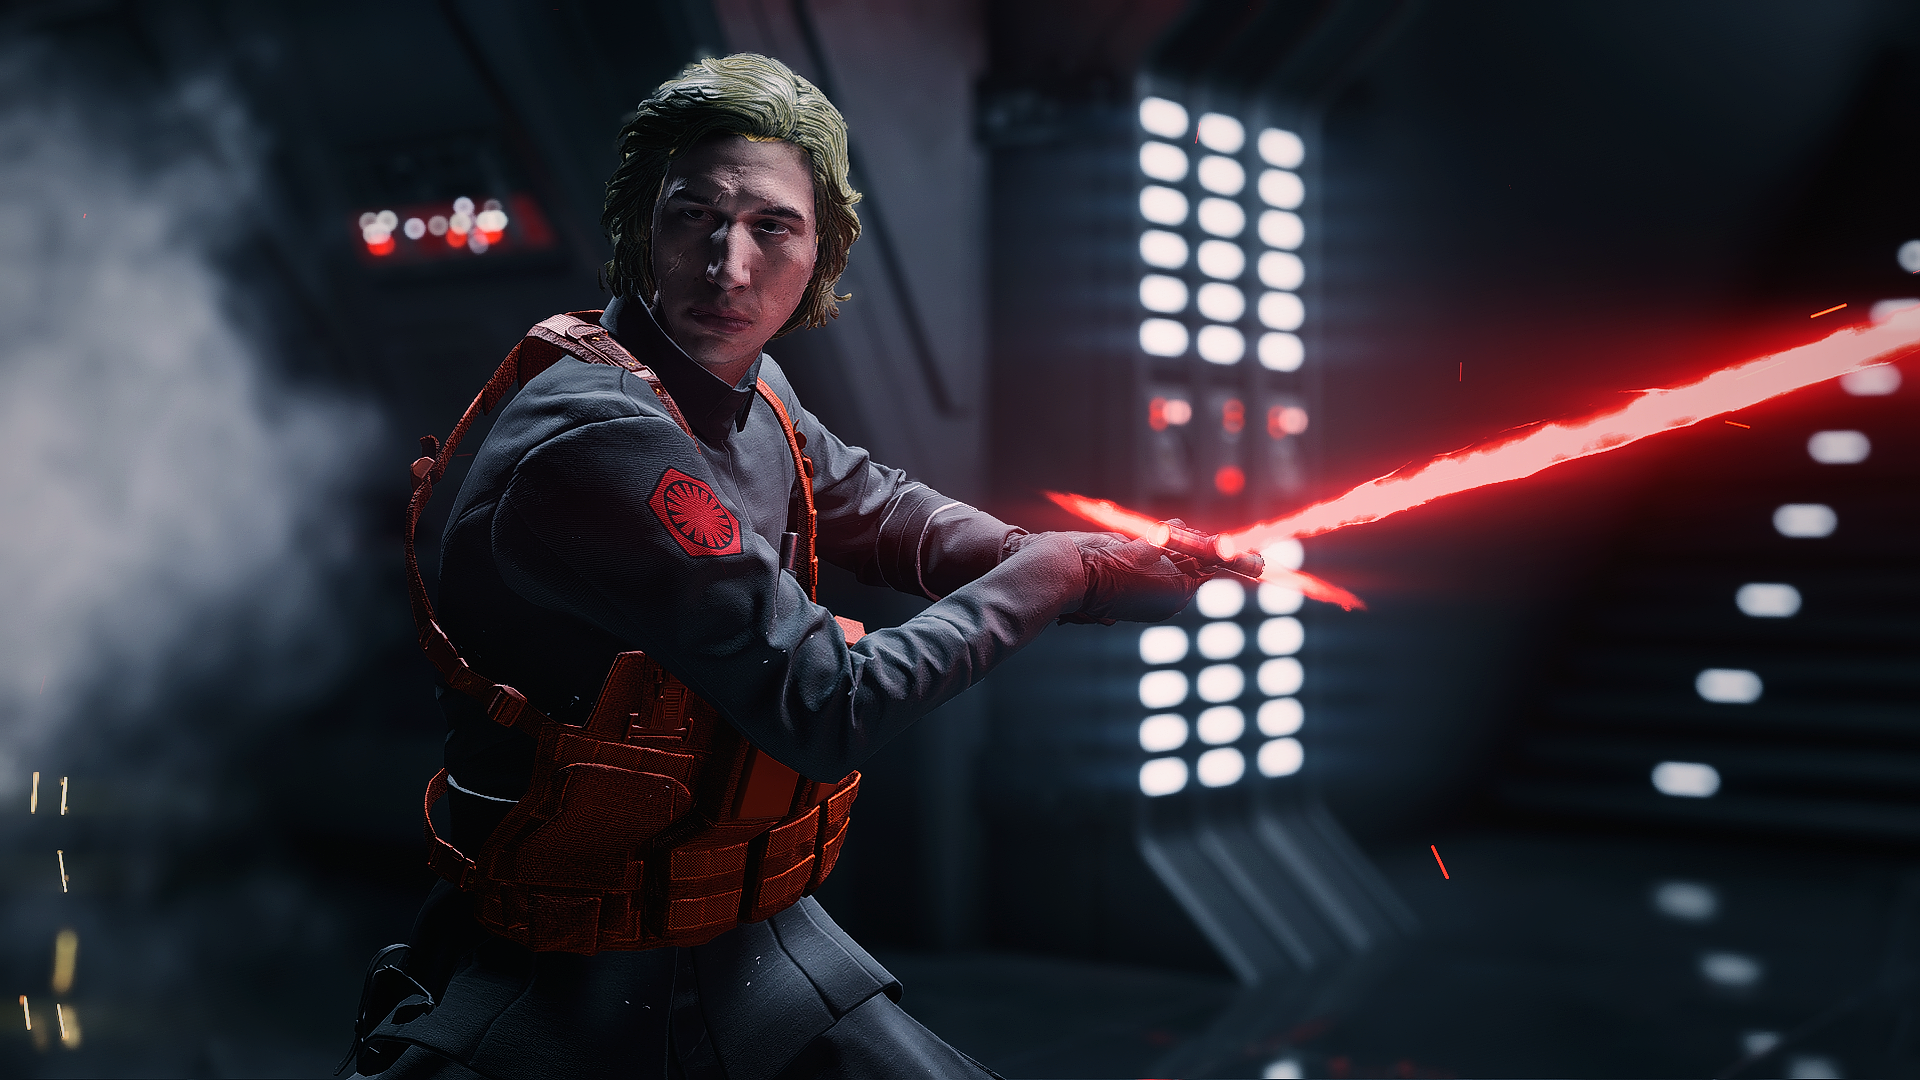 Star Wars Battlefront II Mod Lets You Play as Matt the Technician